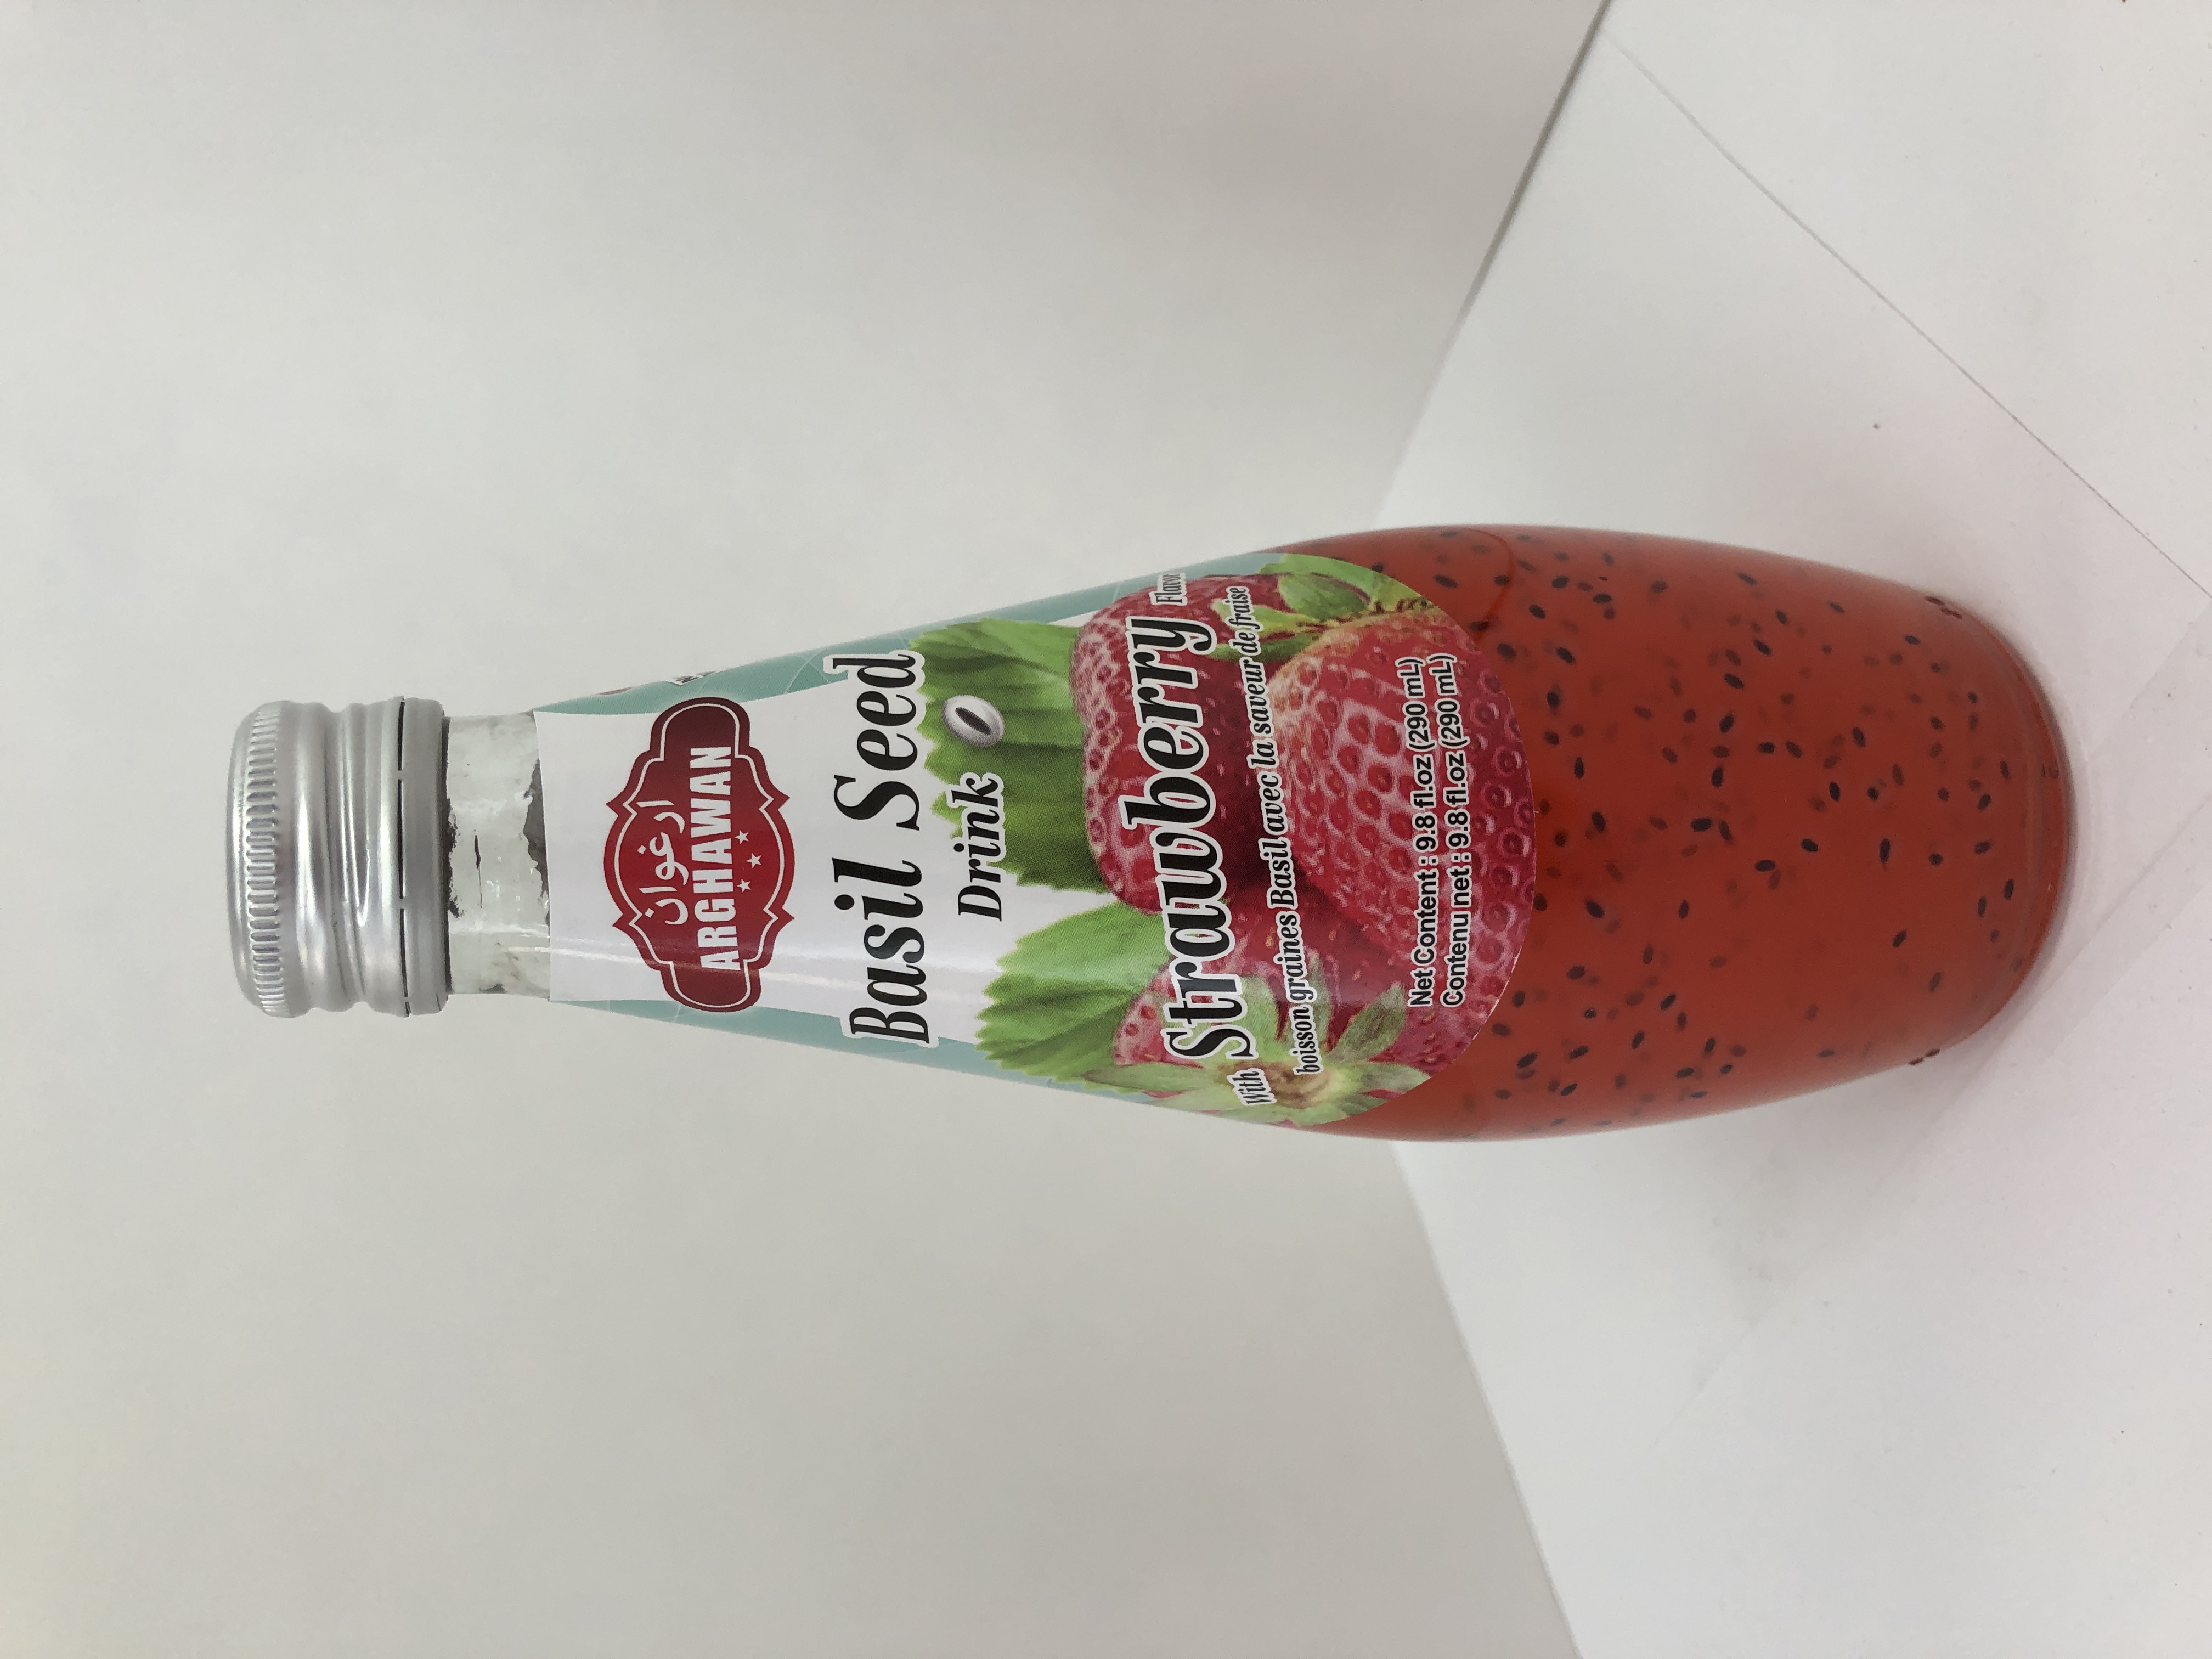 Basil Seed Drink (Strawberry)